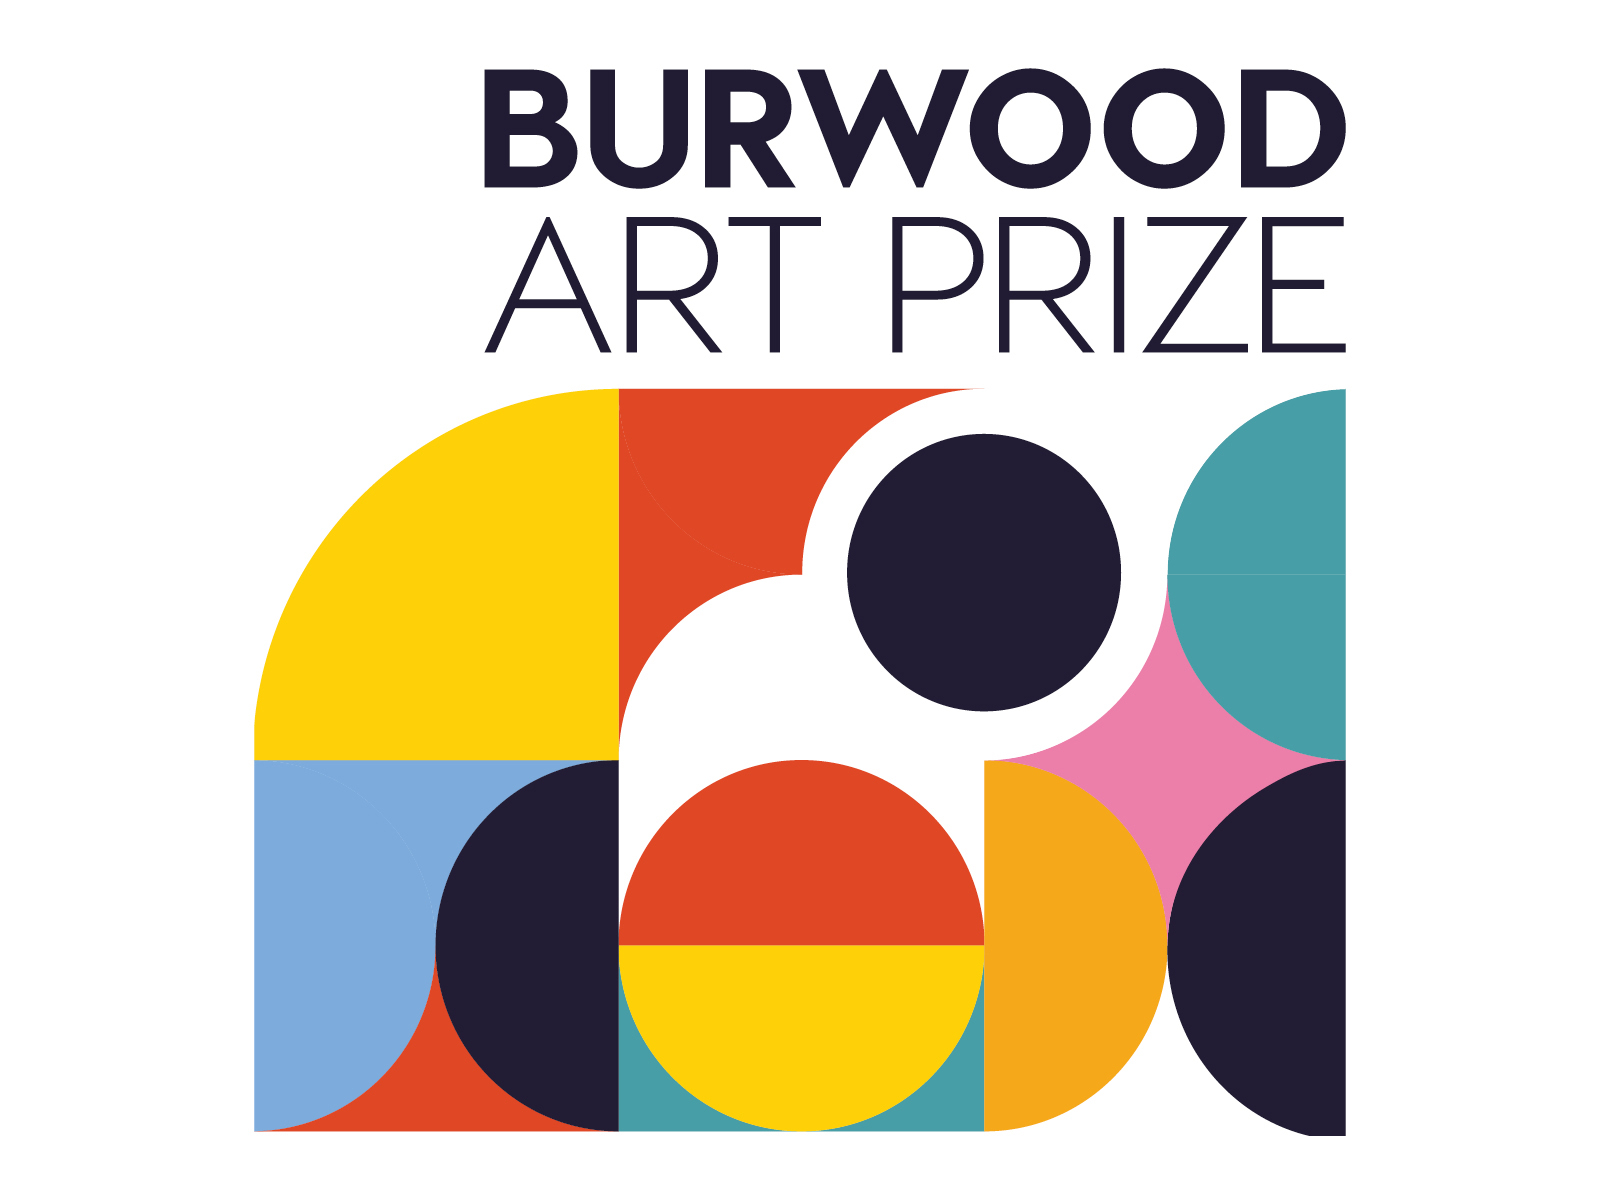 Burwood Art Prize